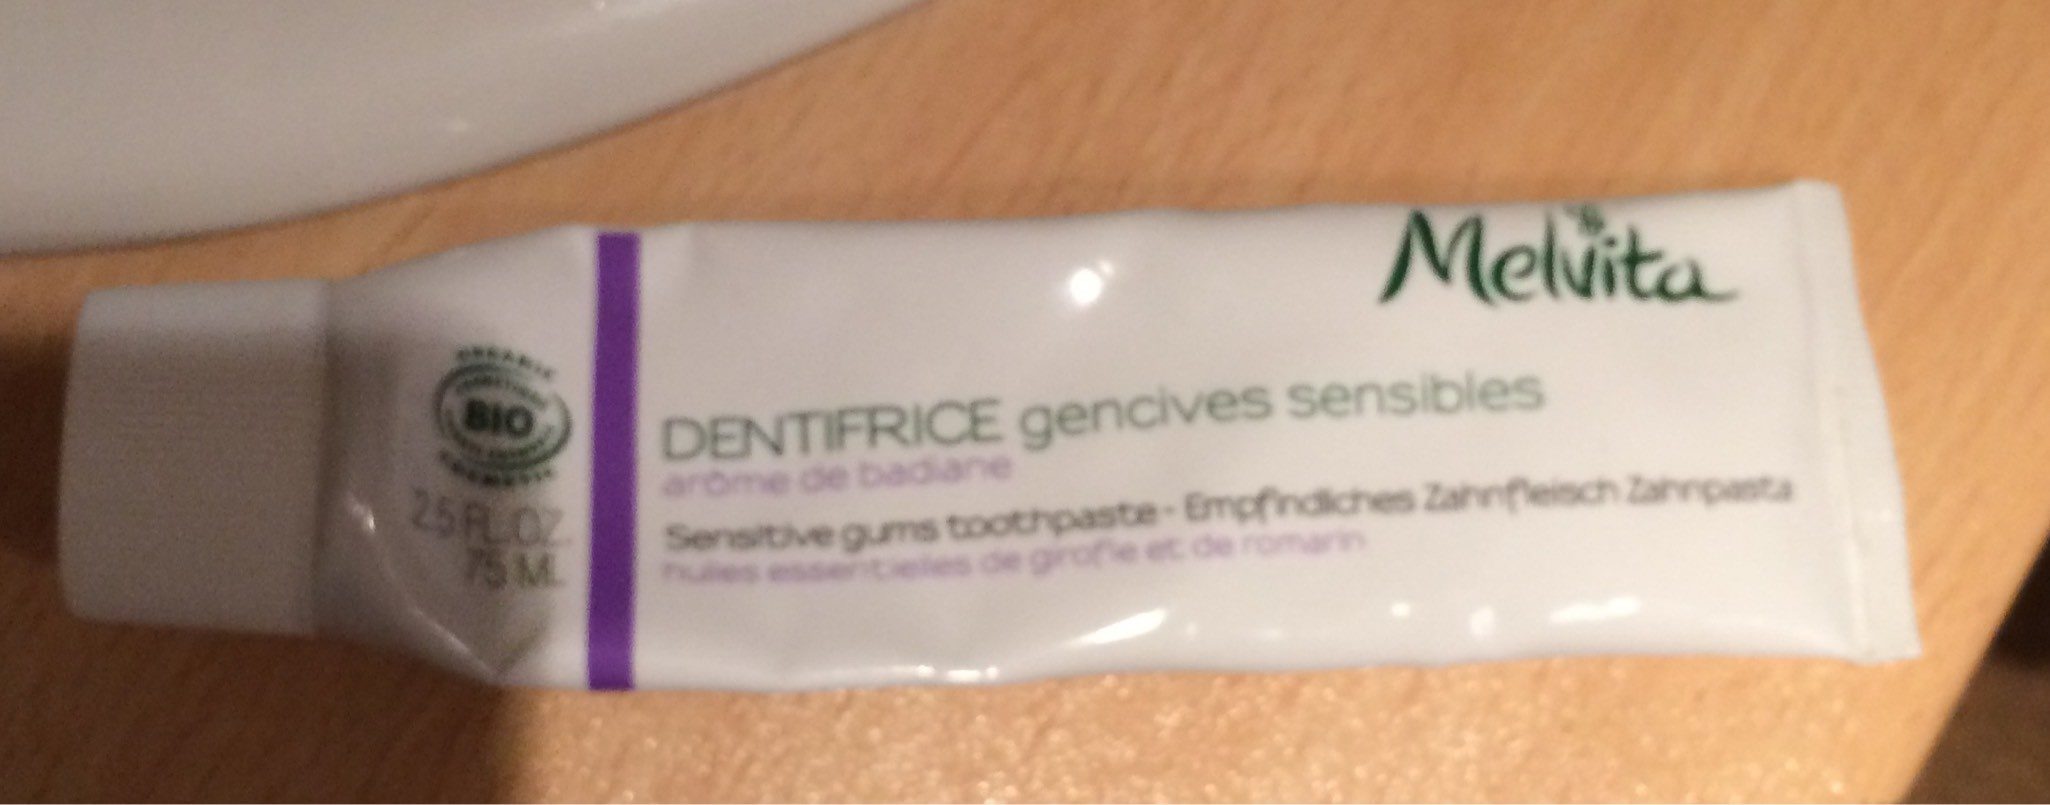 Dentifrice - Tuote - fr